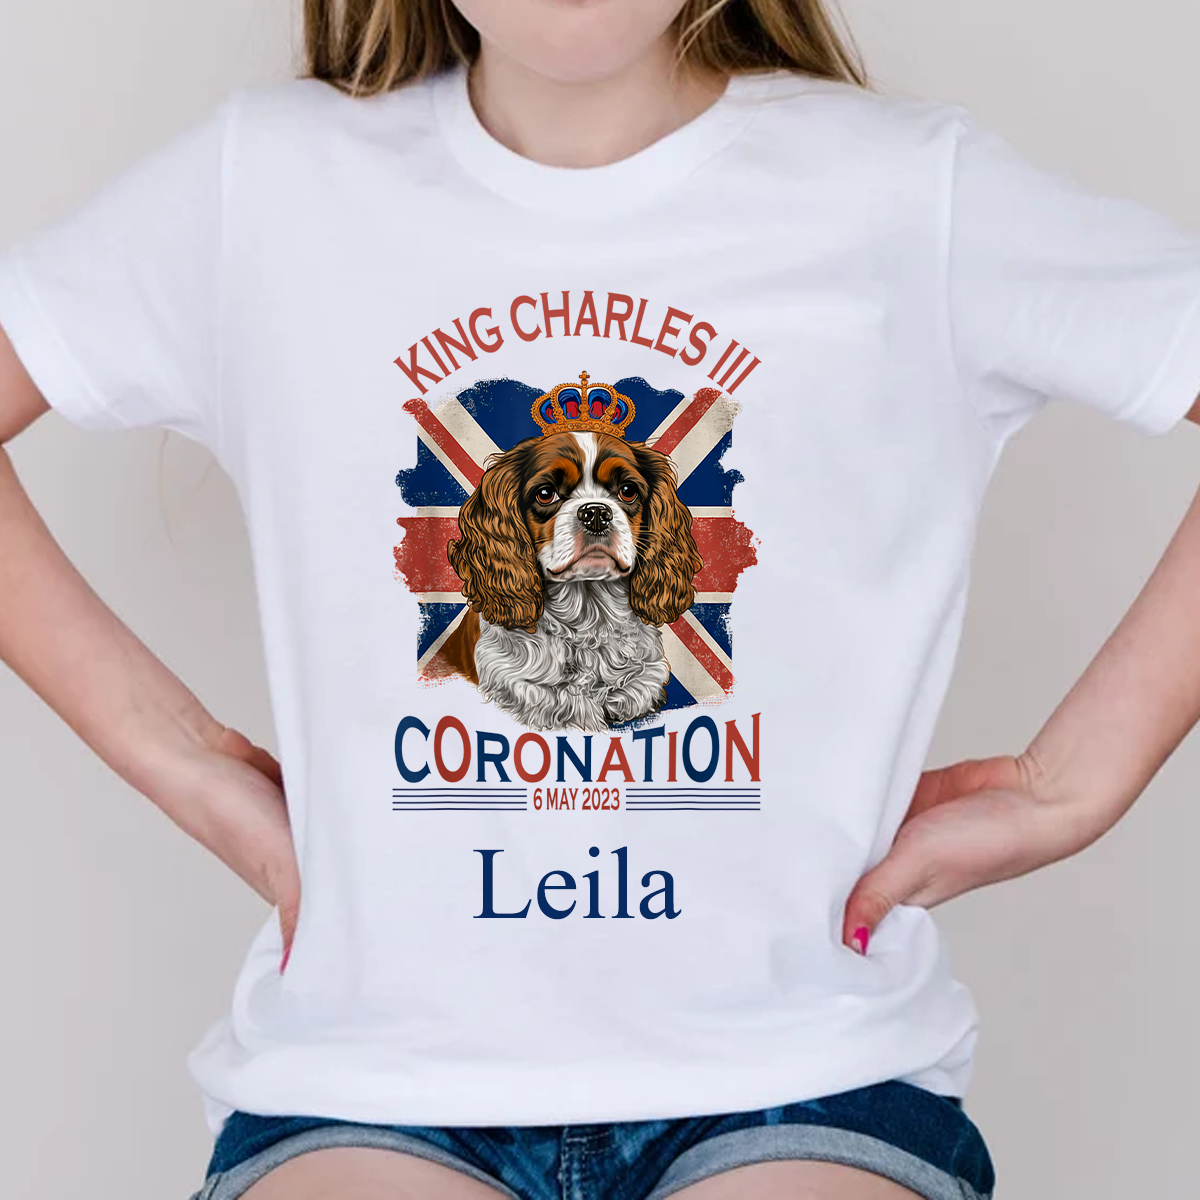 King Charles III Coronation Day T-Shirt